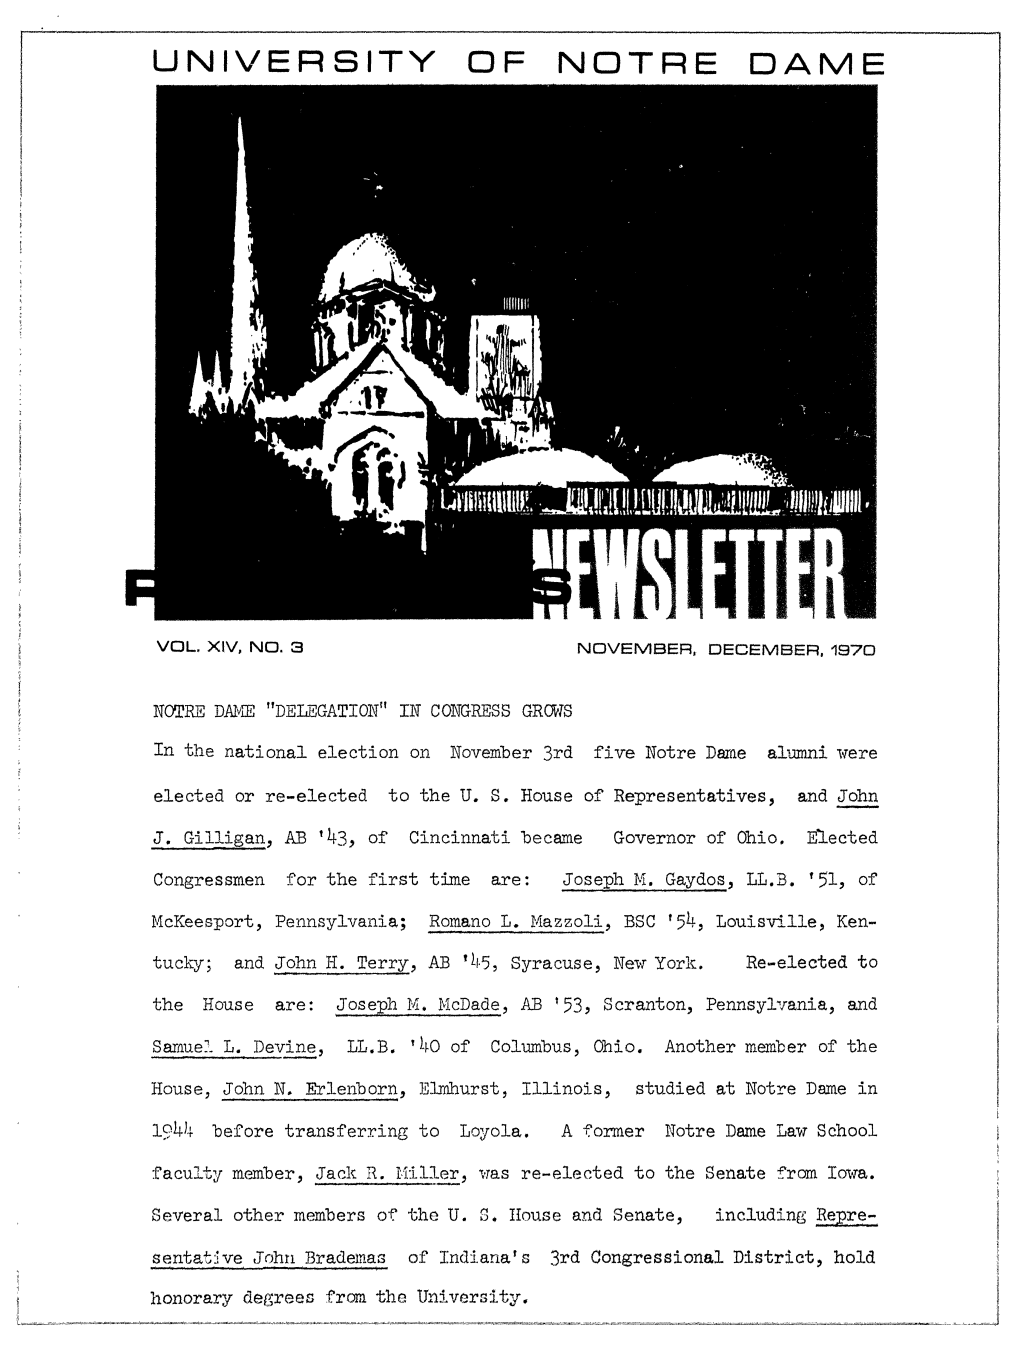 Notre Dame President's Newsletter, Volume 14, Number 3: 1970/11-12